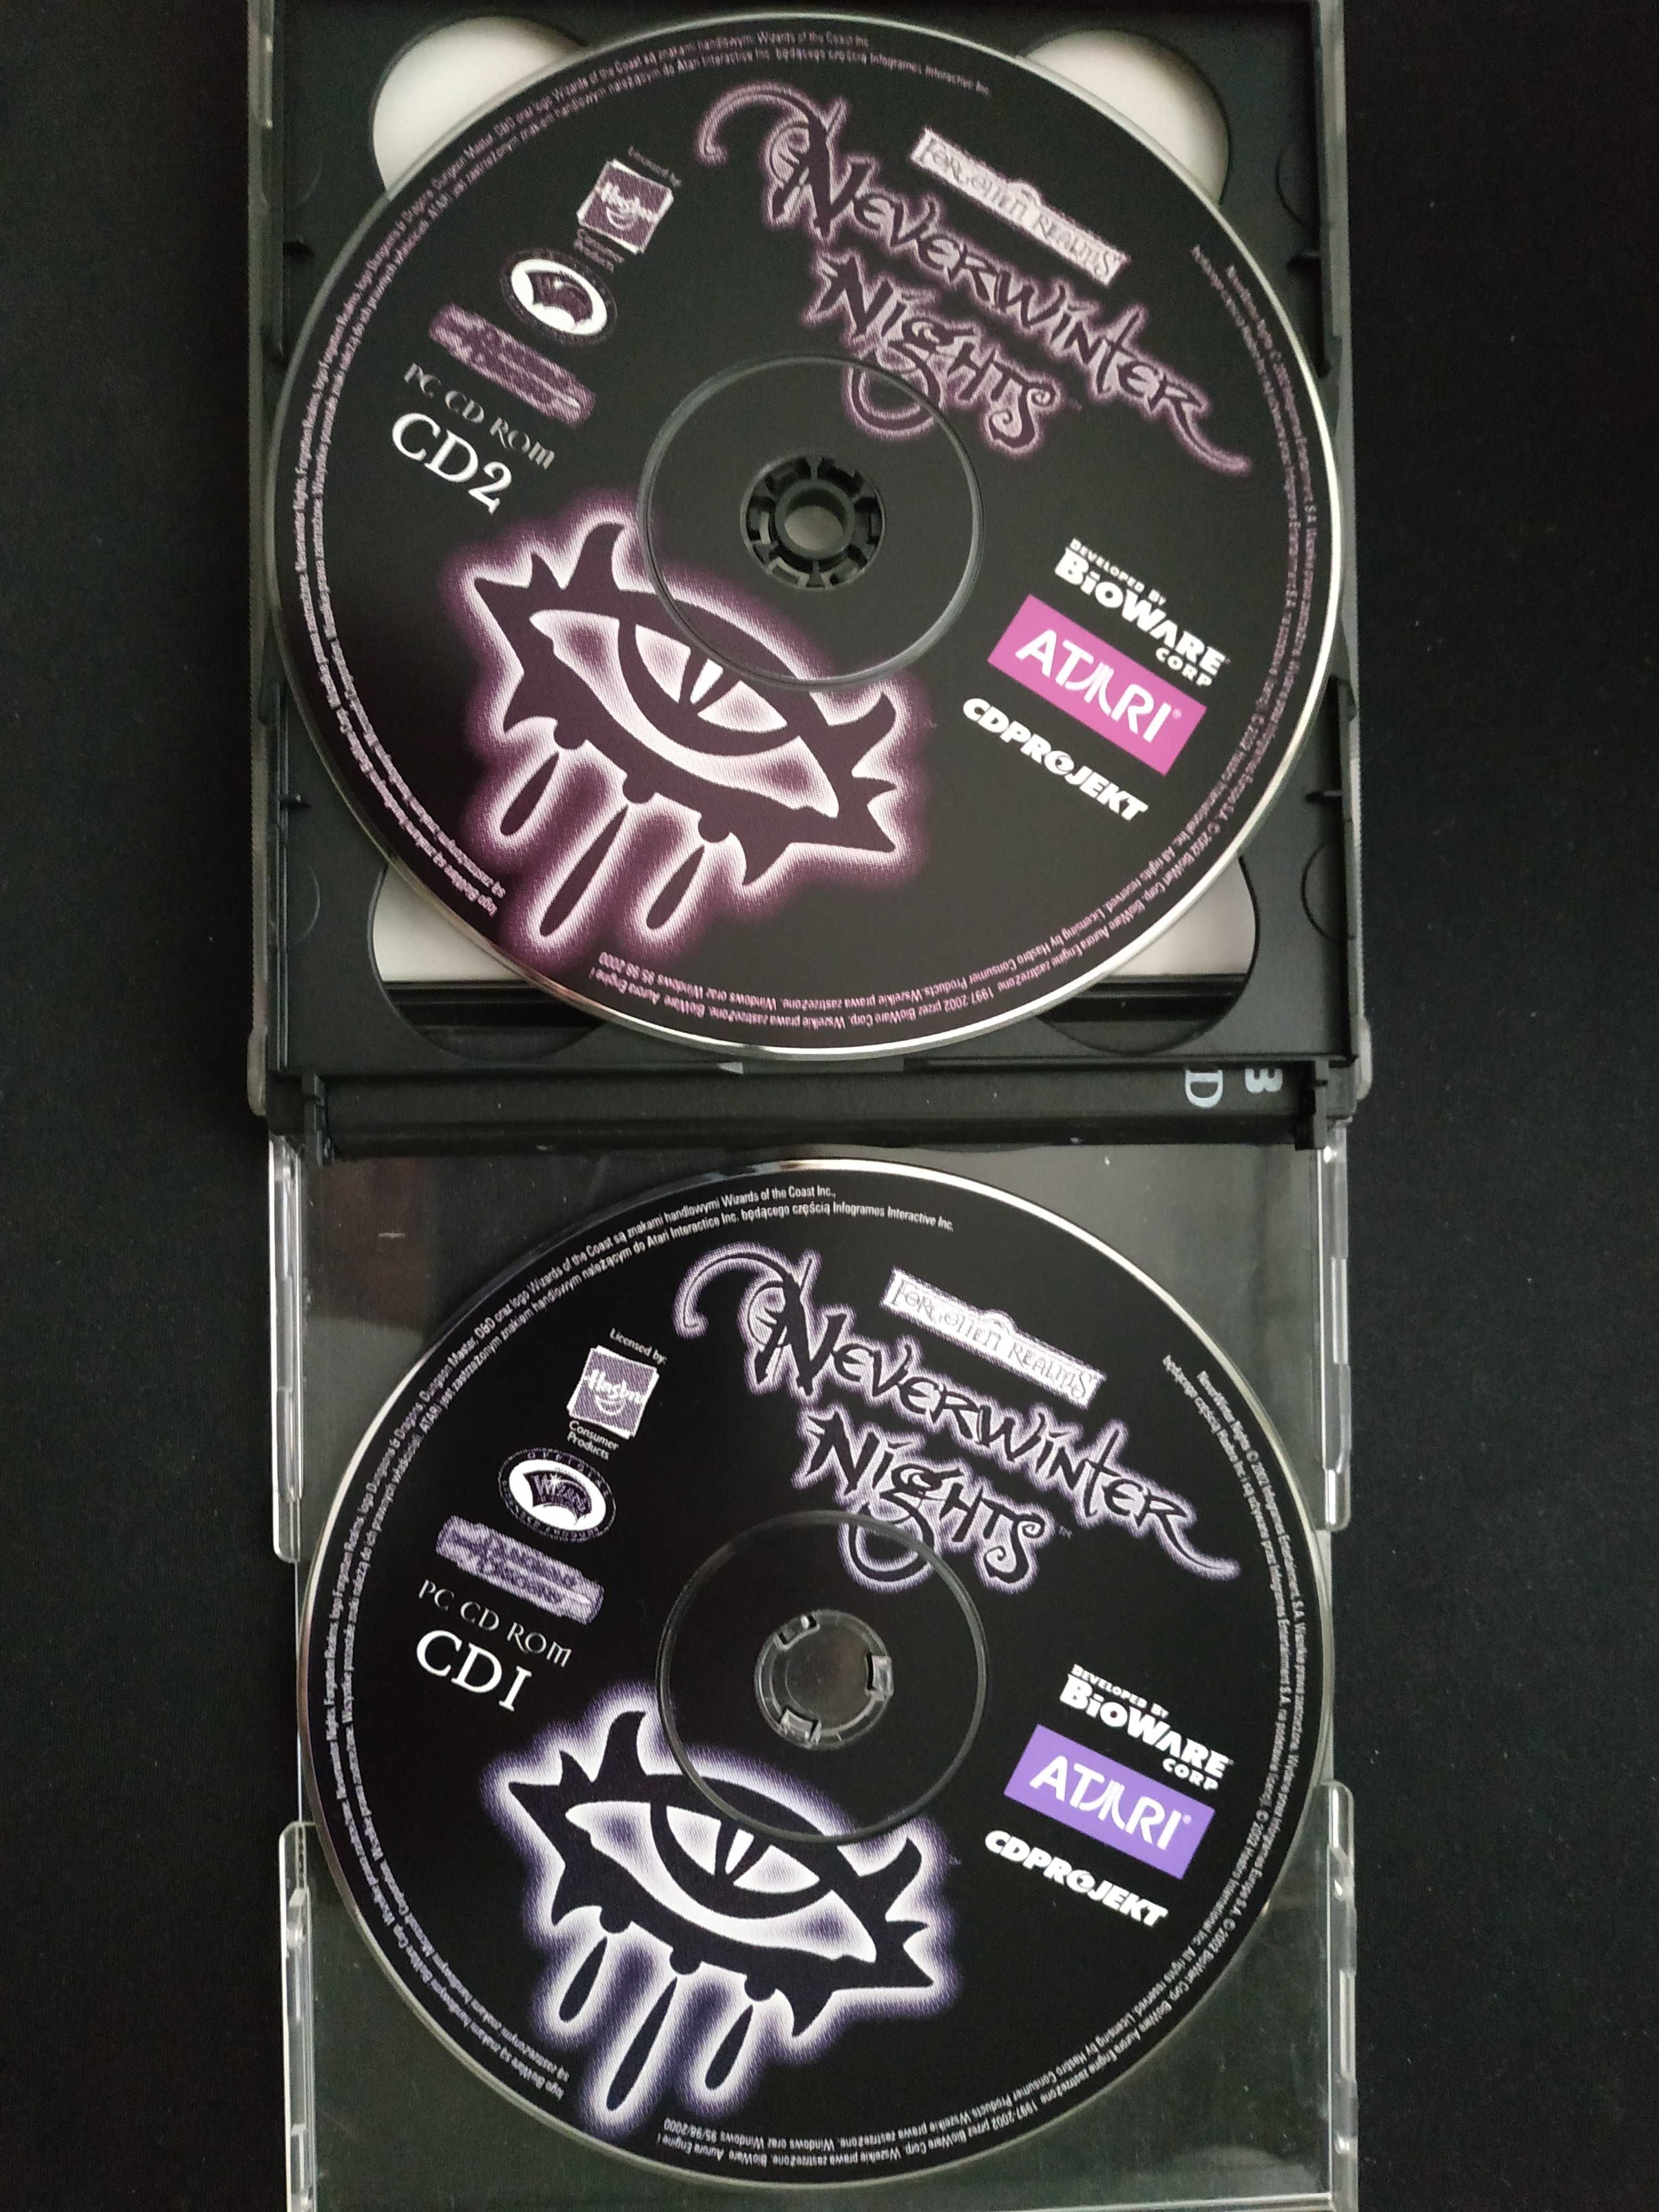 Neverwinter Nights 2002 gra na PC Polska dystrybucja